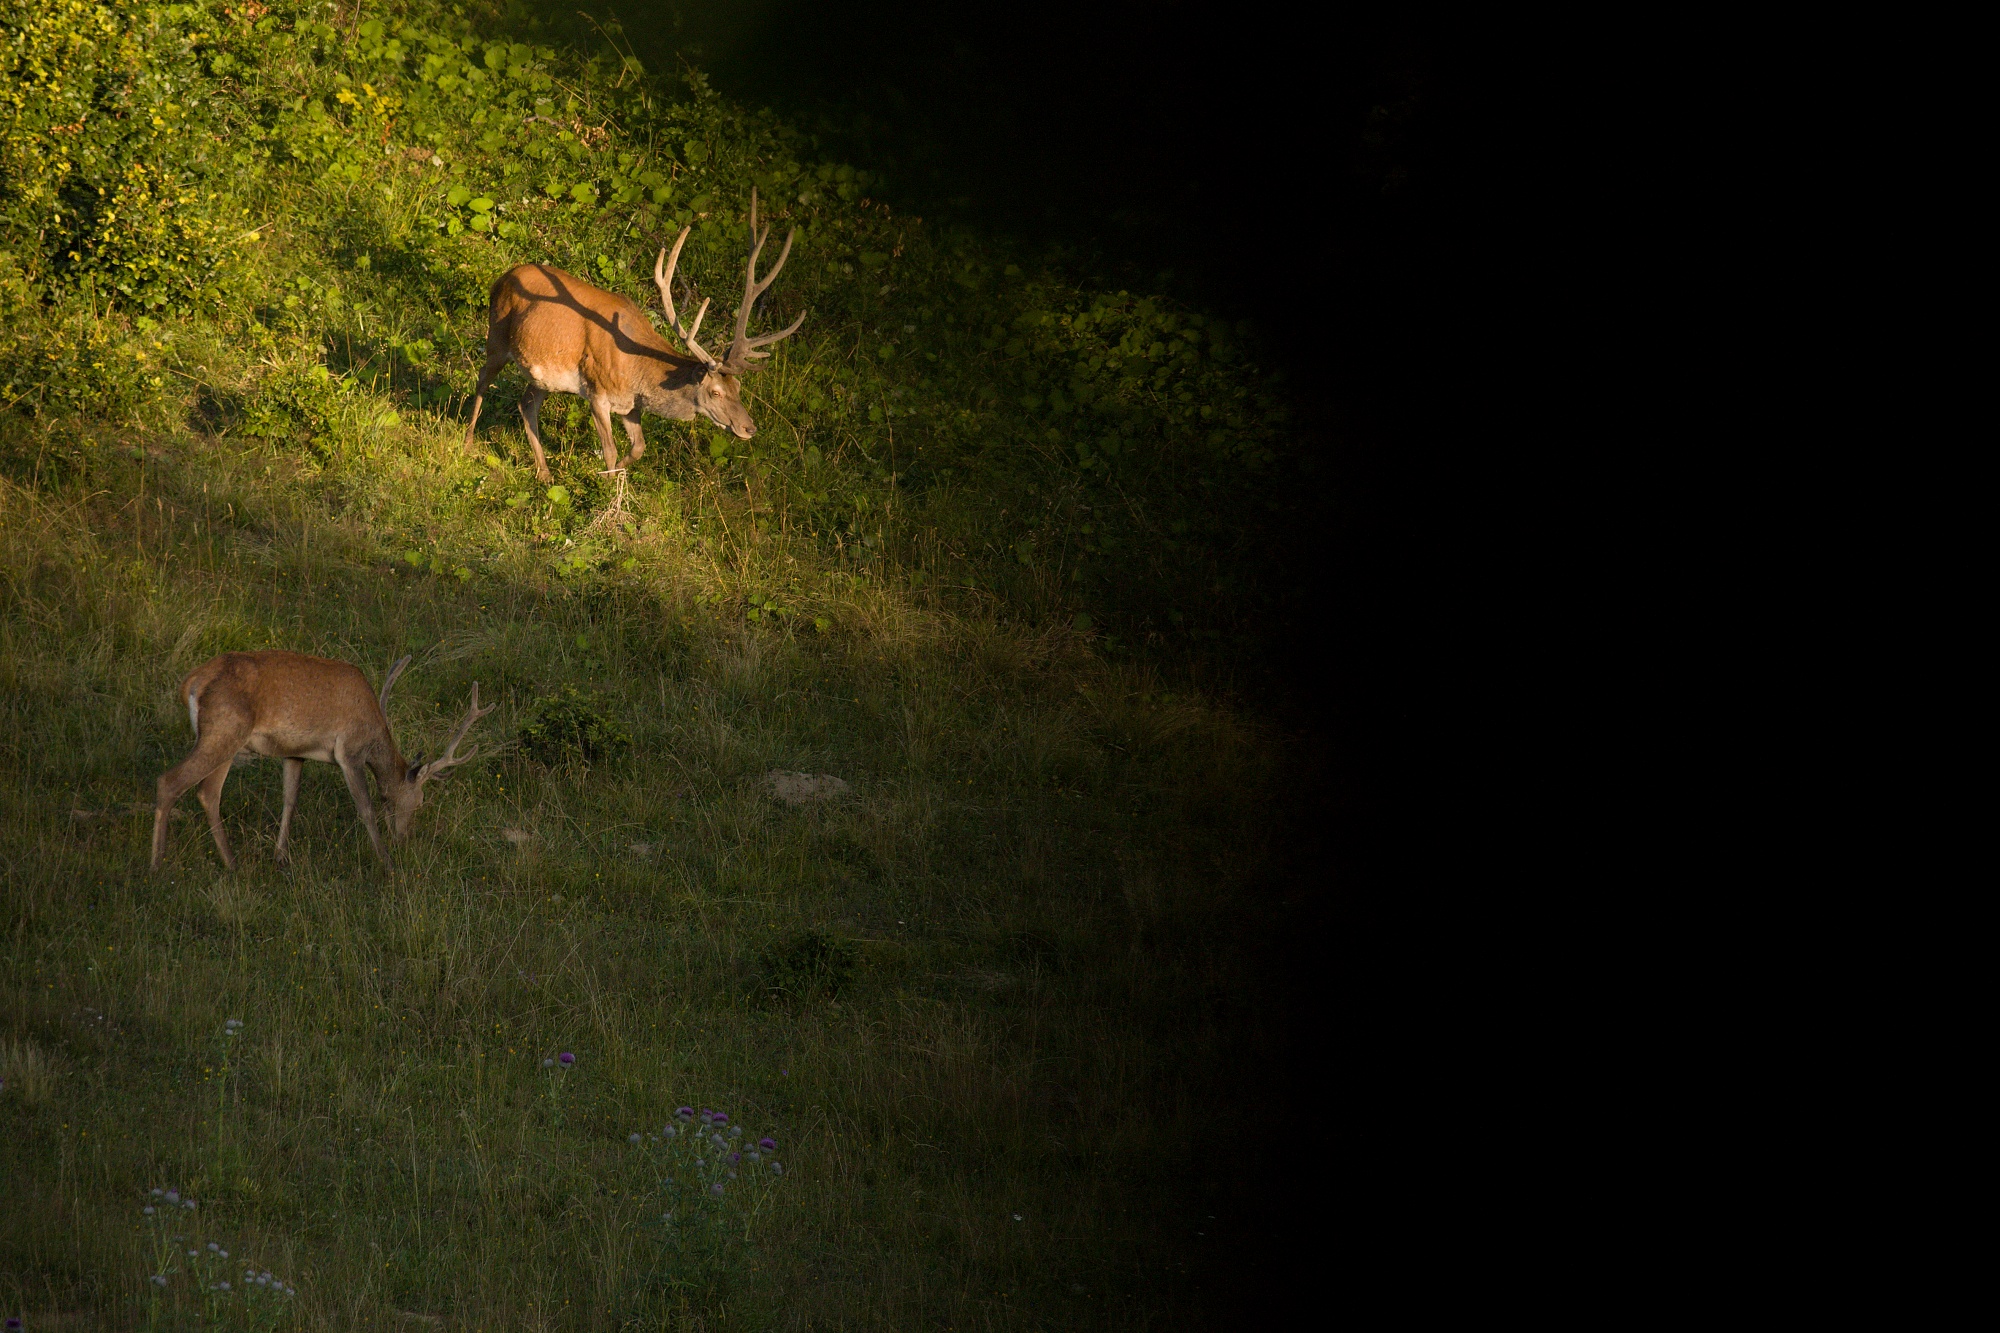 jeleň lesný (Cervus elaphus) Red deer, Malá Fatra, Slovensko Canon EOS 6d mark II + Canon 100-400 f4.5-5.6 L IS II USM, 400mm, 1/800, f5.6, ISO 1000, 3. august 2021